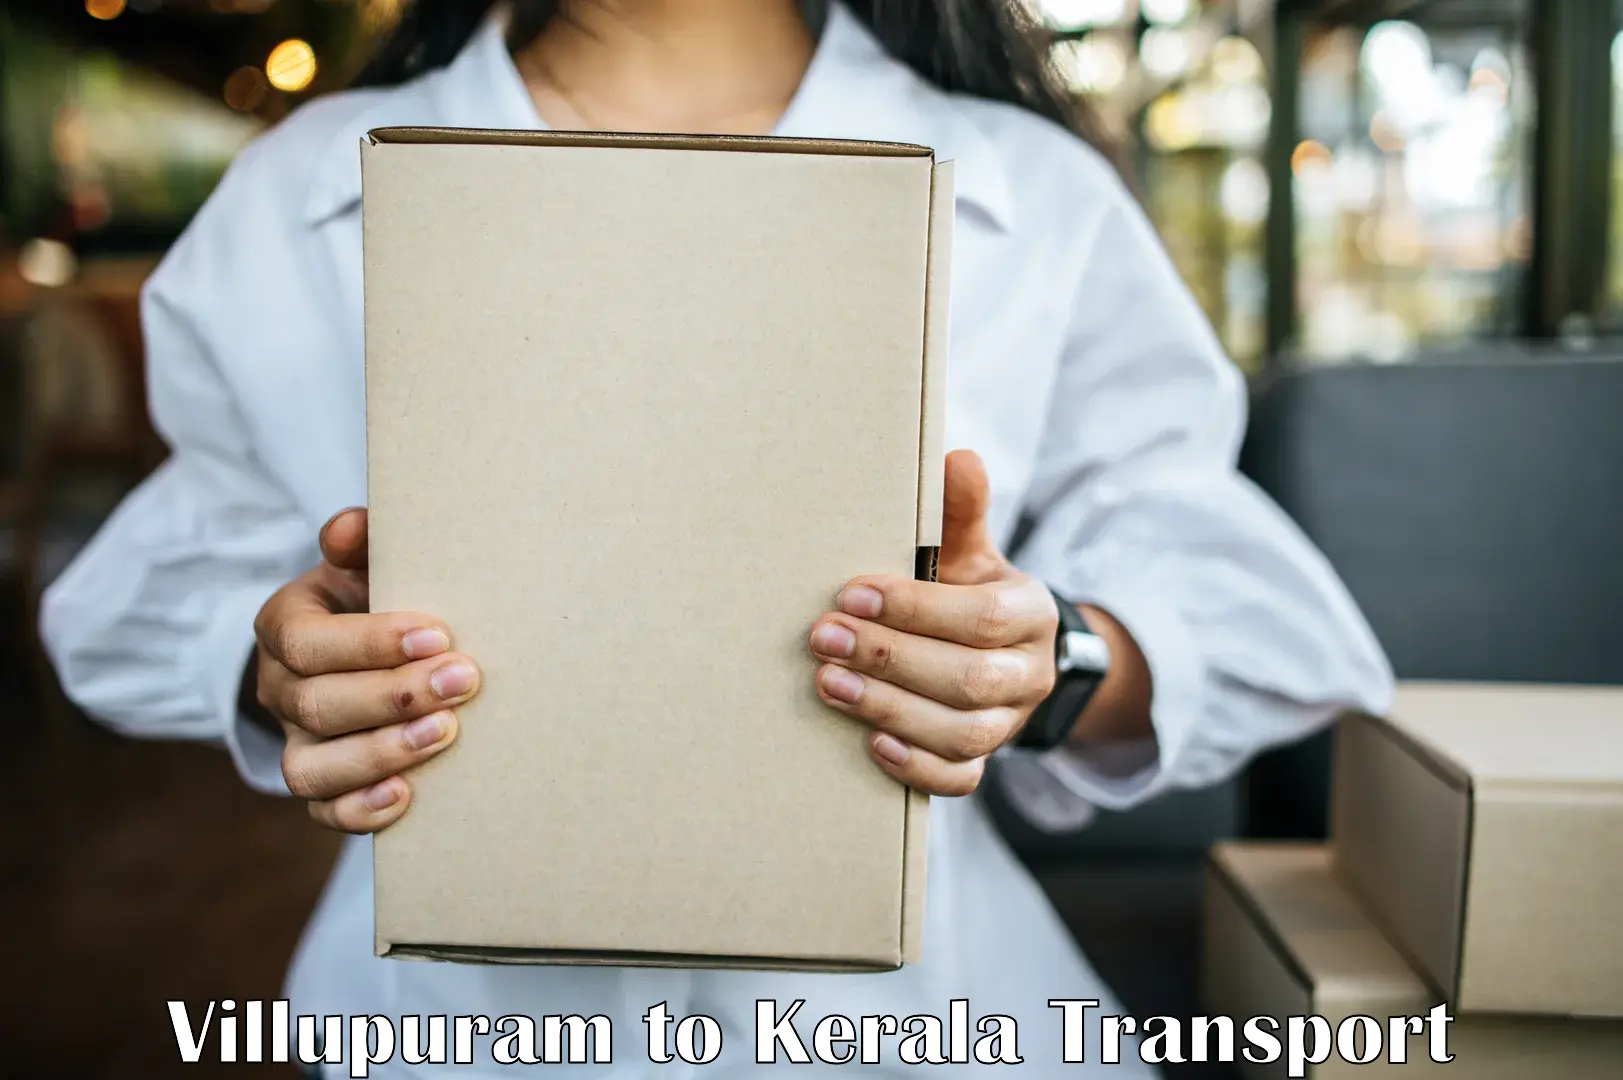 Delivery service Villupuram to Kerala